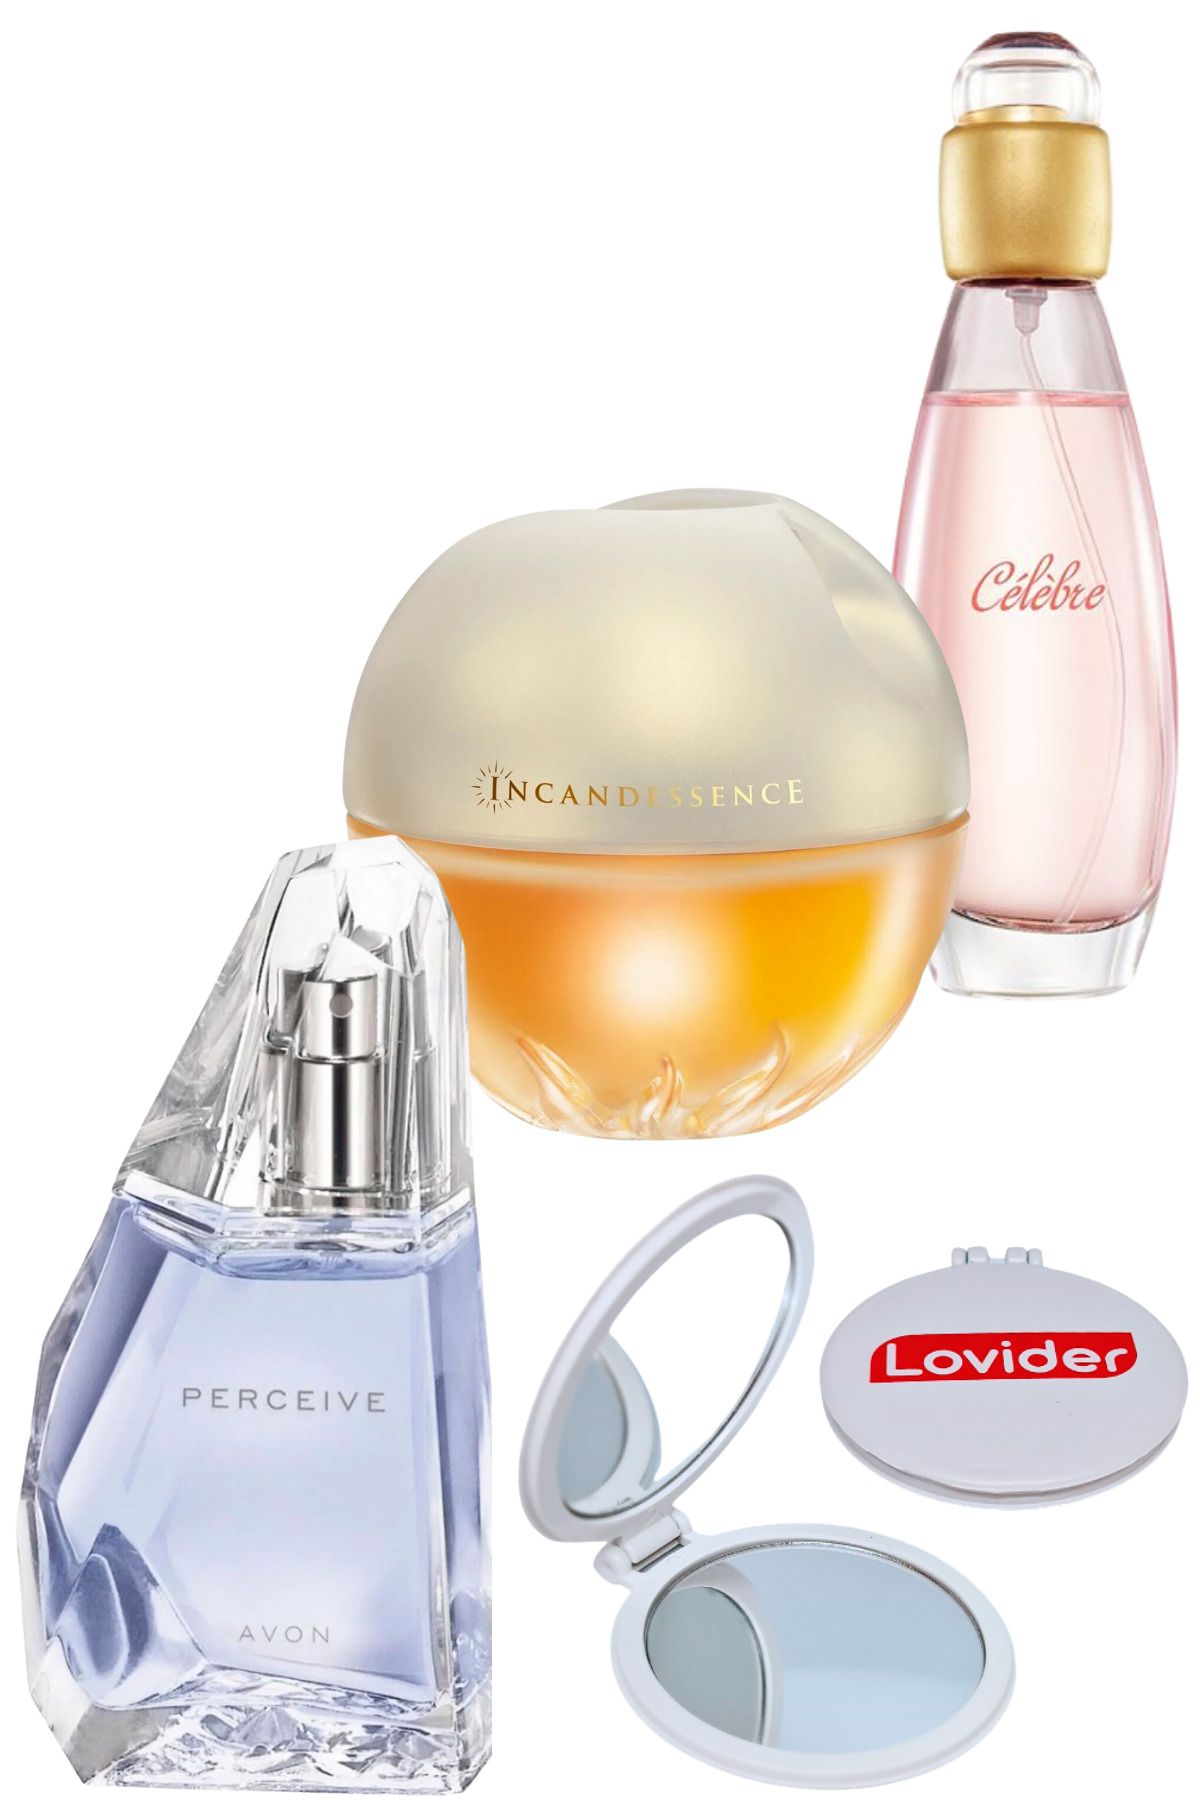 Avon Perceive Kadın Parfüm + Incandessence Kadın Parfüm + Celebre Kadın Parfüm + Lovider Cep Ayna